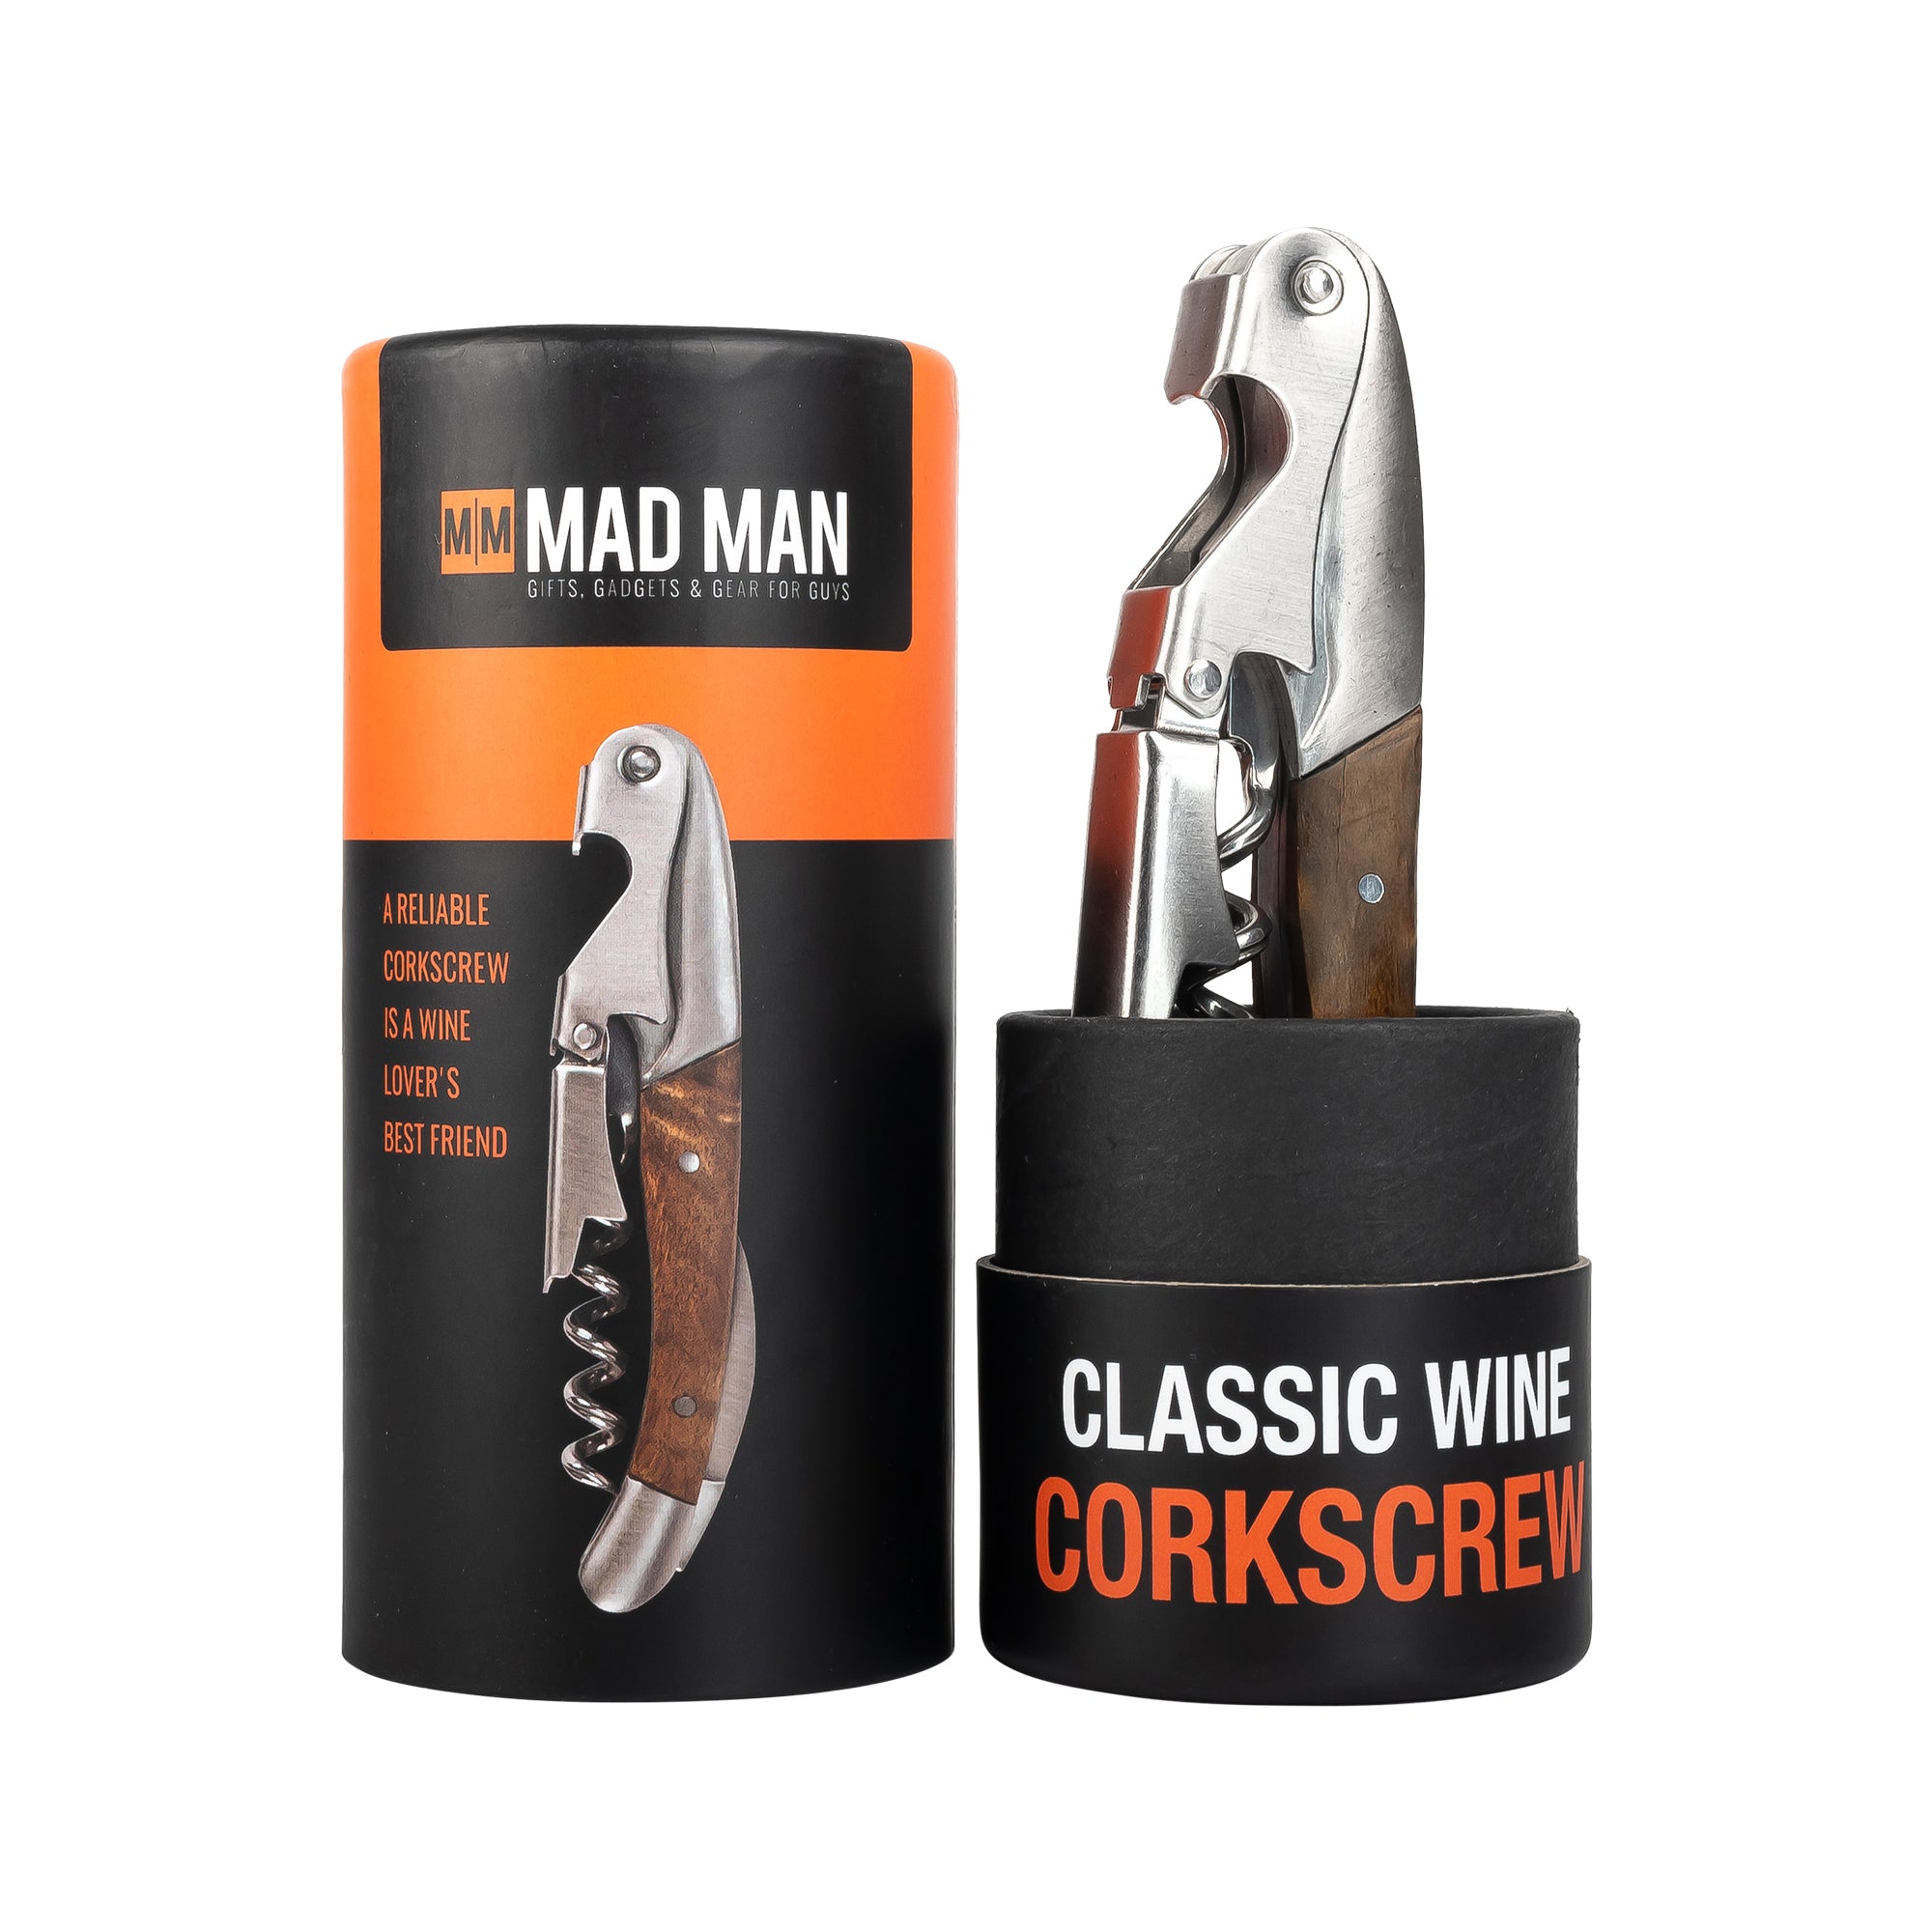 Classic Wine Corkscrew